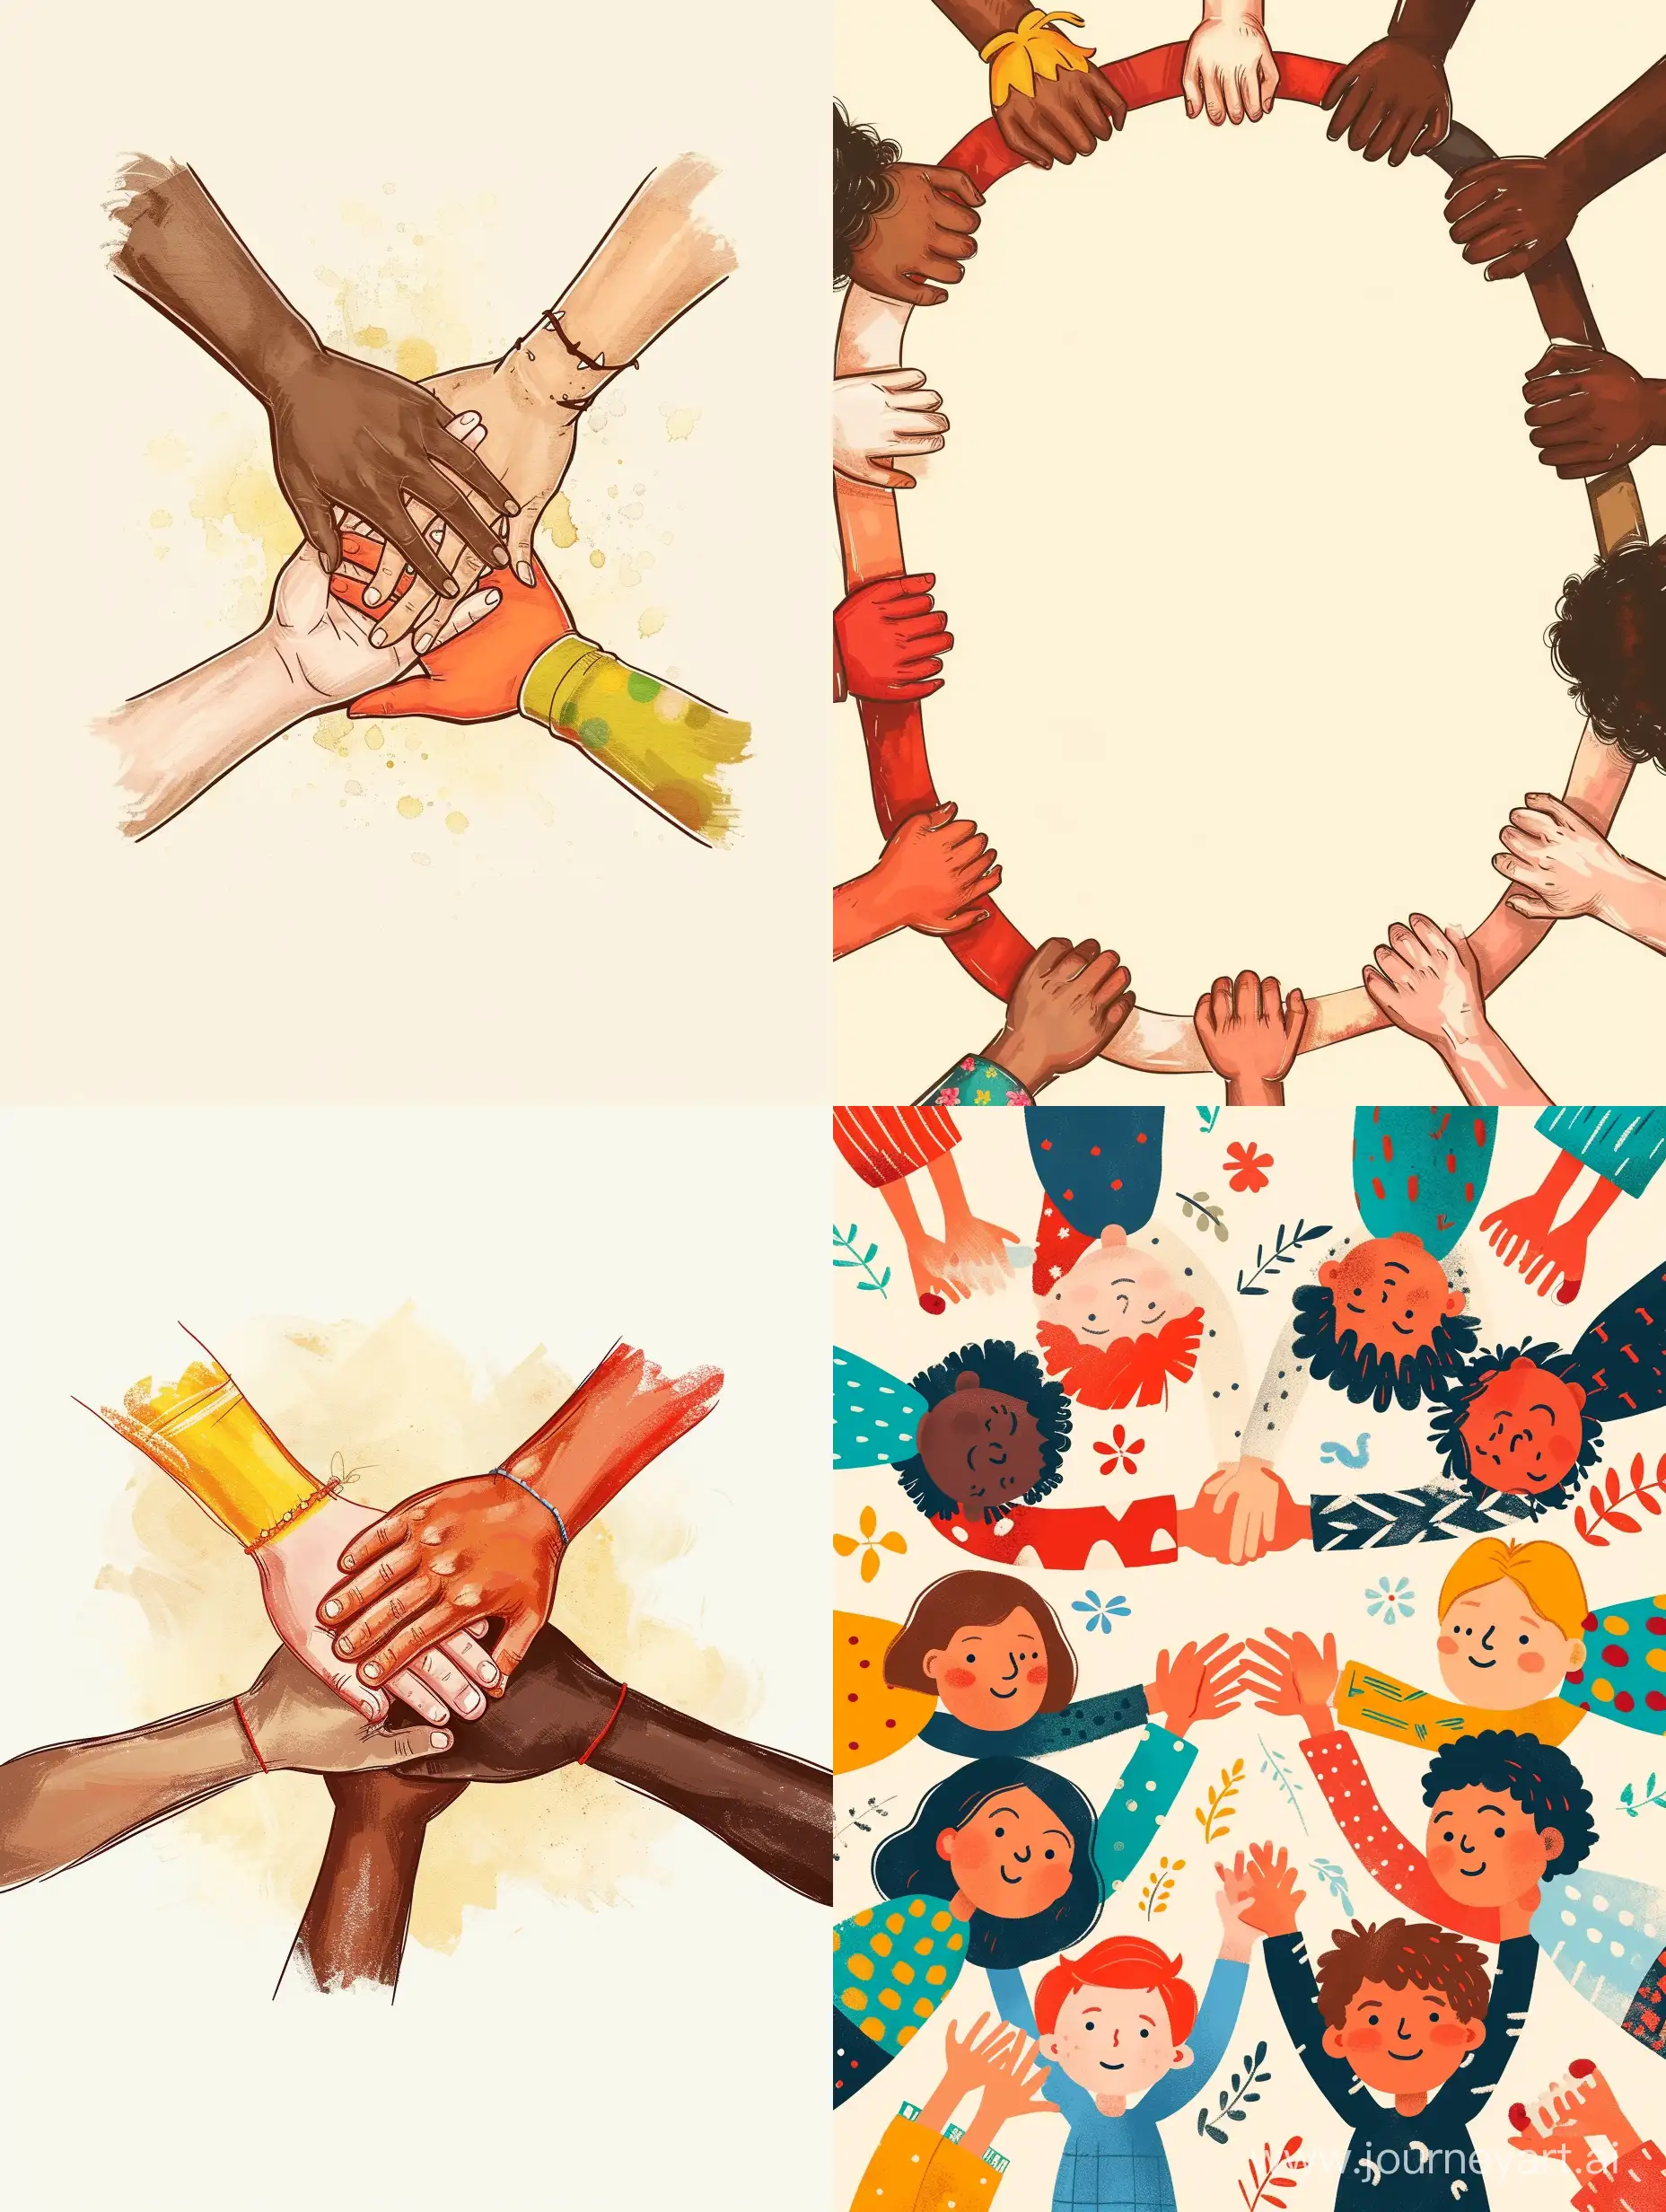 Diverse-Children-Holding-Hands-in-Unity-Illustration